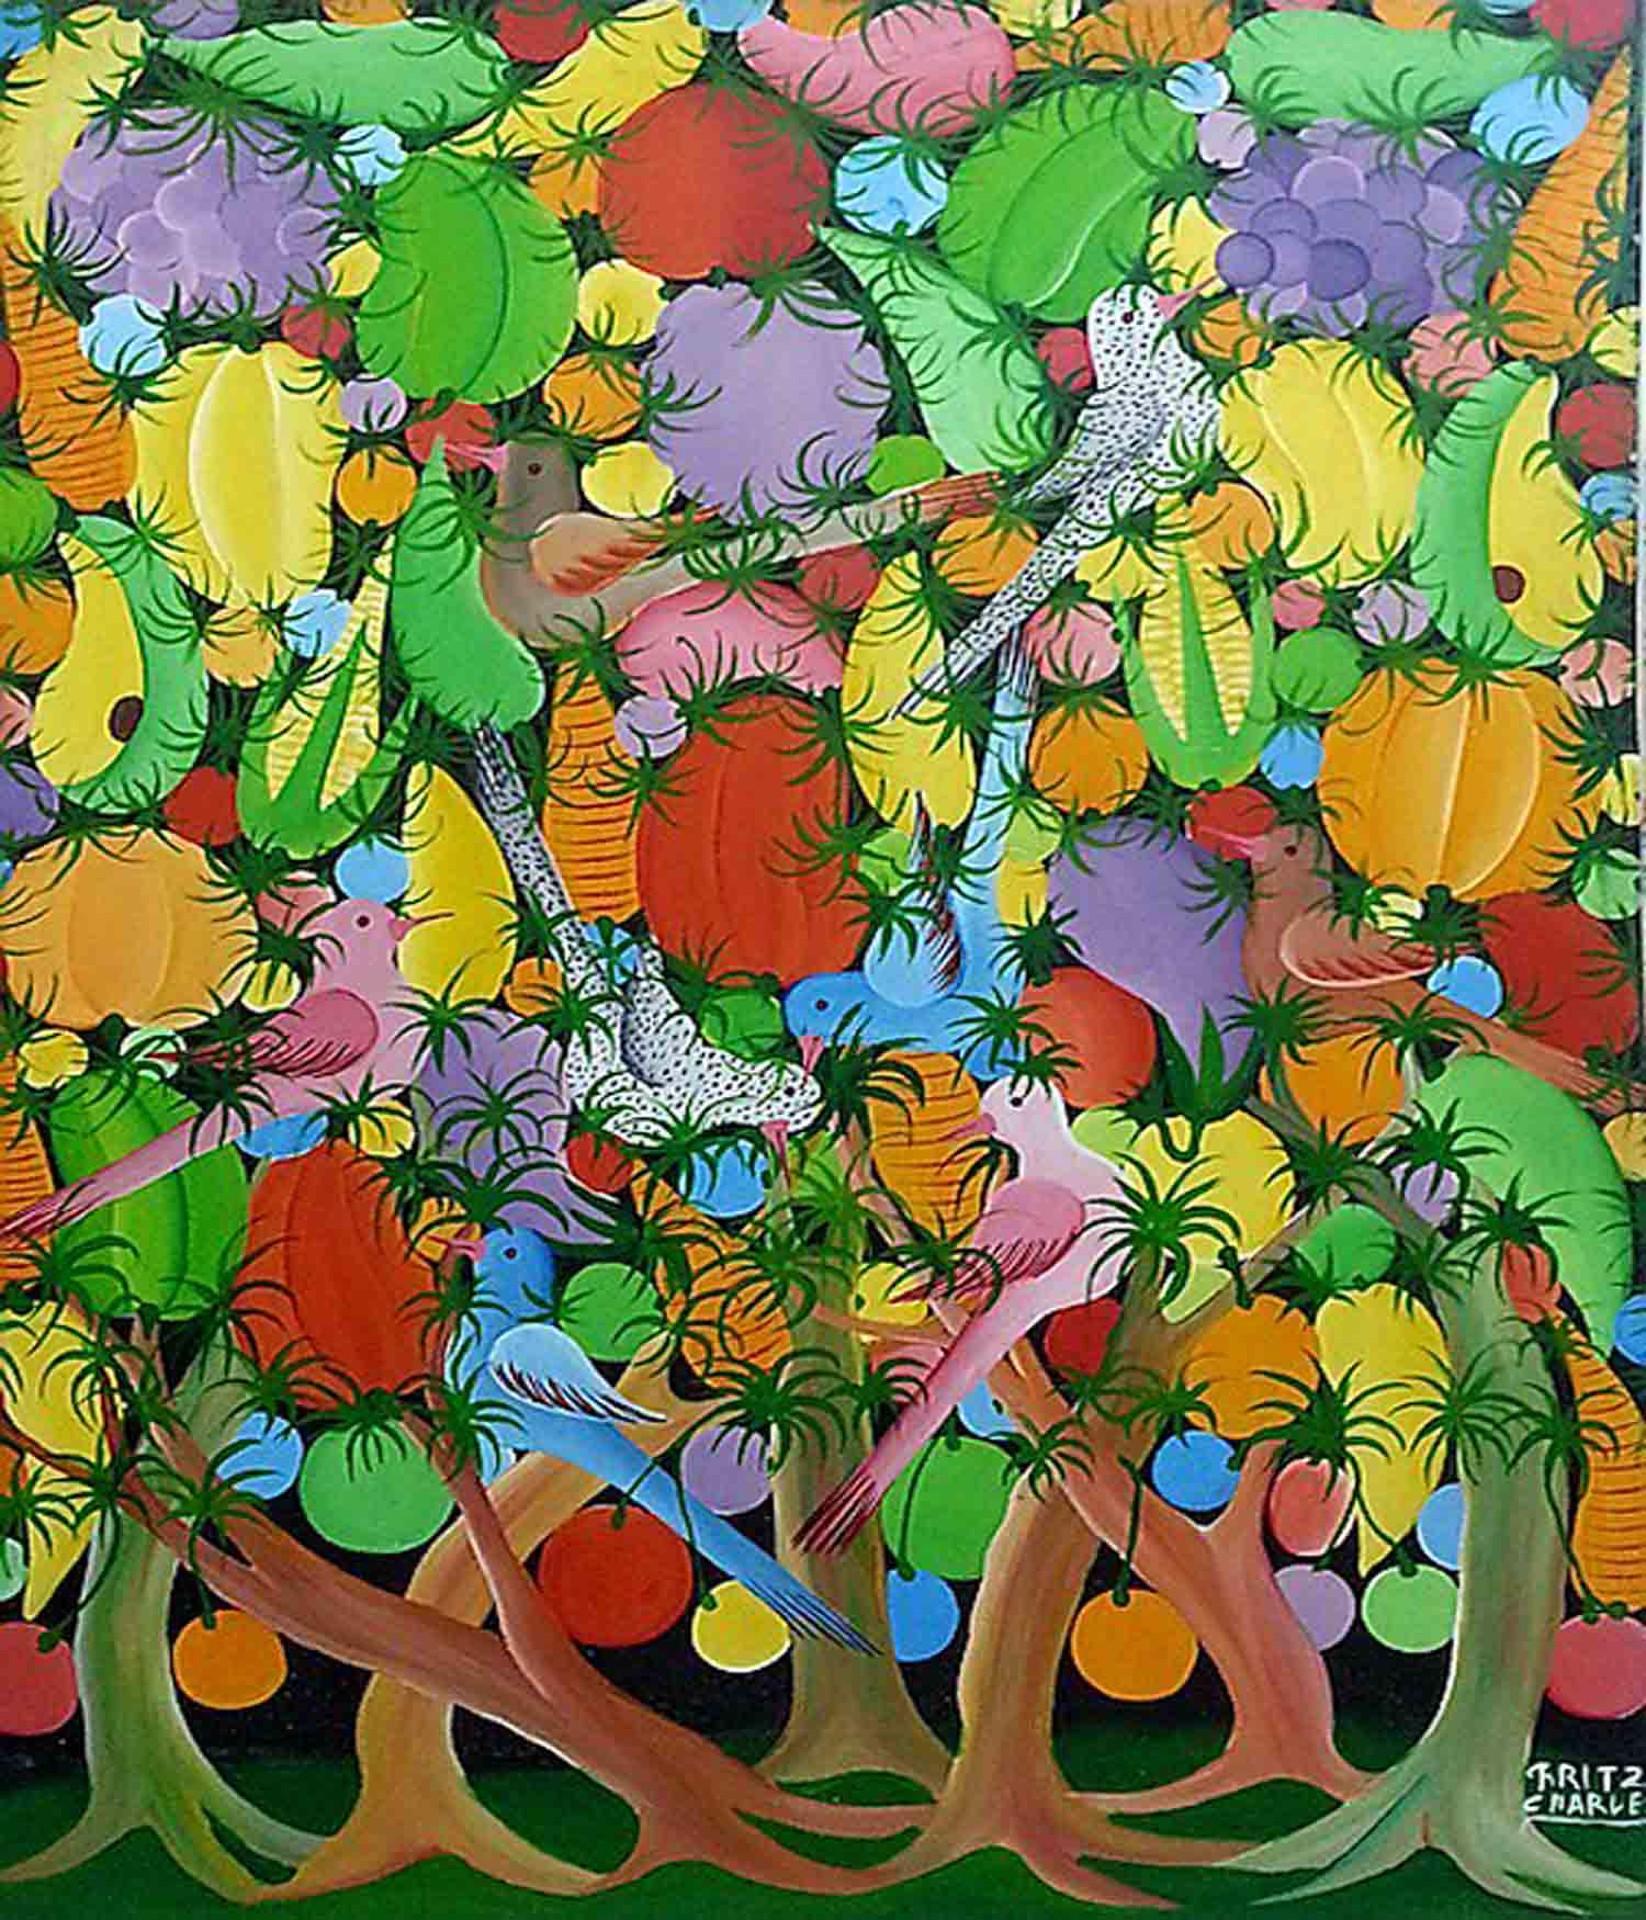 Colorful Birds#2JN-NY - Art by Fritz Charles